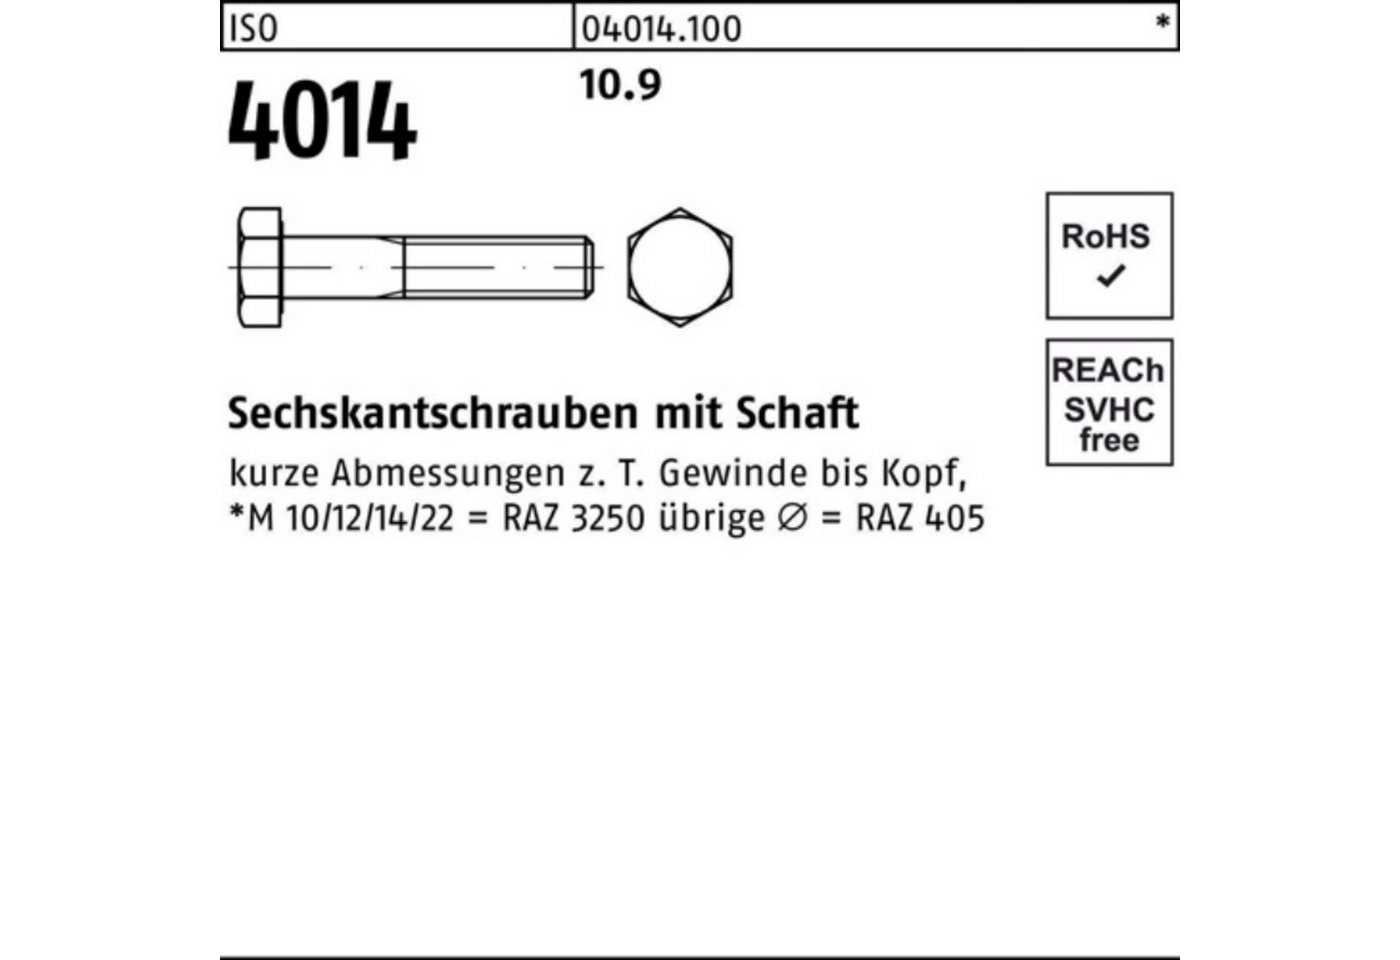 Bufab Sechskantschraube 100er Pack Sechskantschraube ISO 4014 Schaft M22x 130 10.9 10 Stück I von Bufab